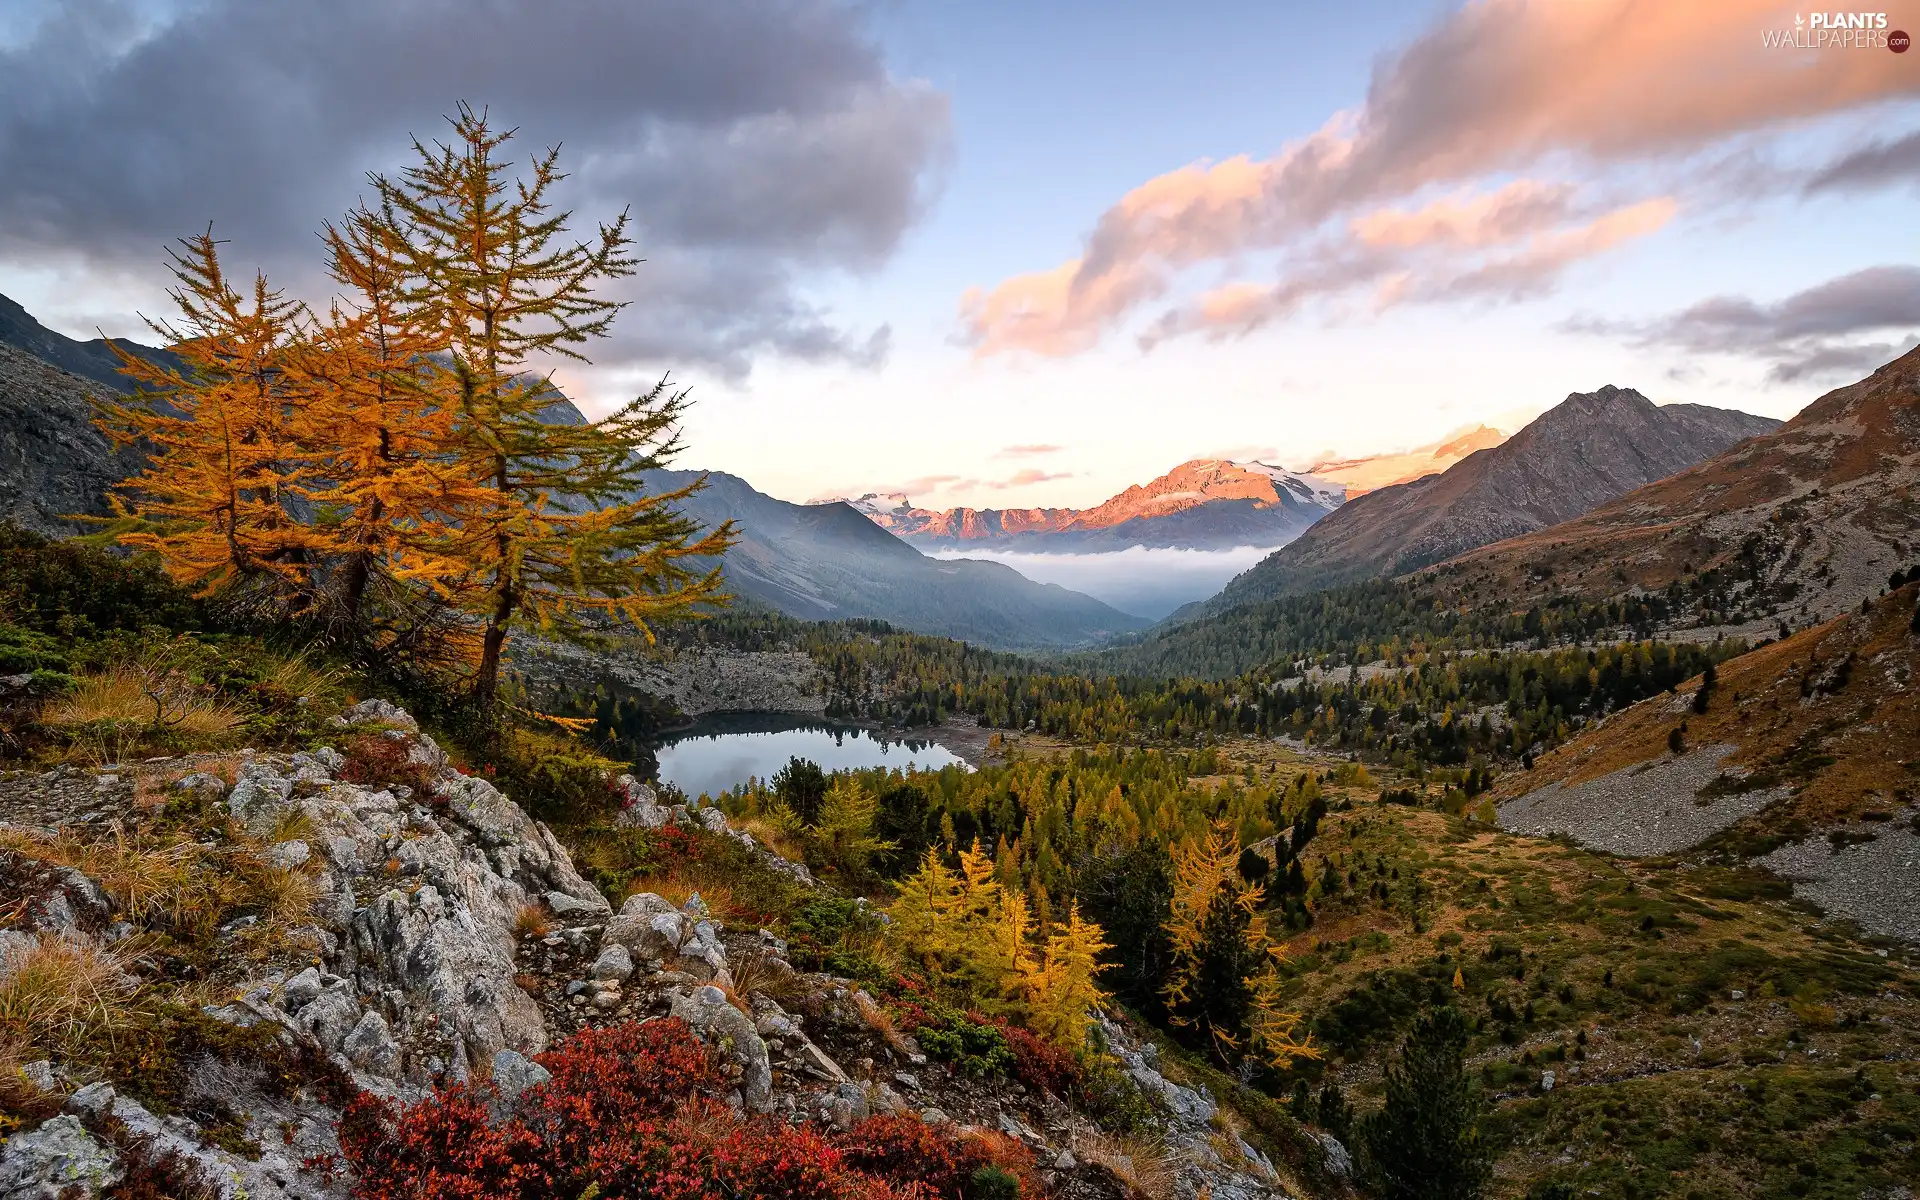 rocks, Rodent, lake, viewes, Mountains, Switzerland, Engadin Valley, Bush, trees, autumn